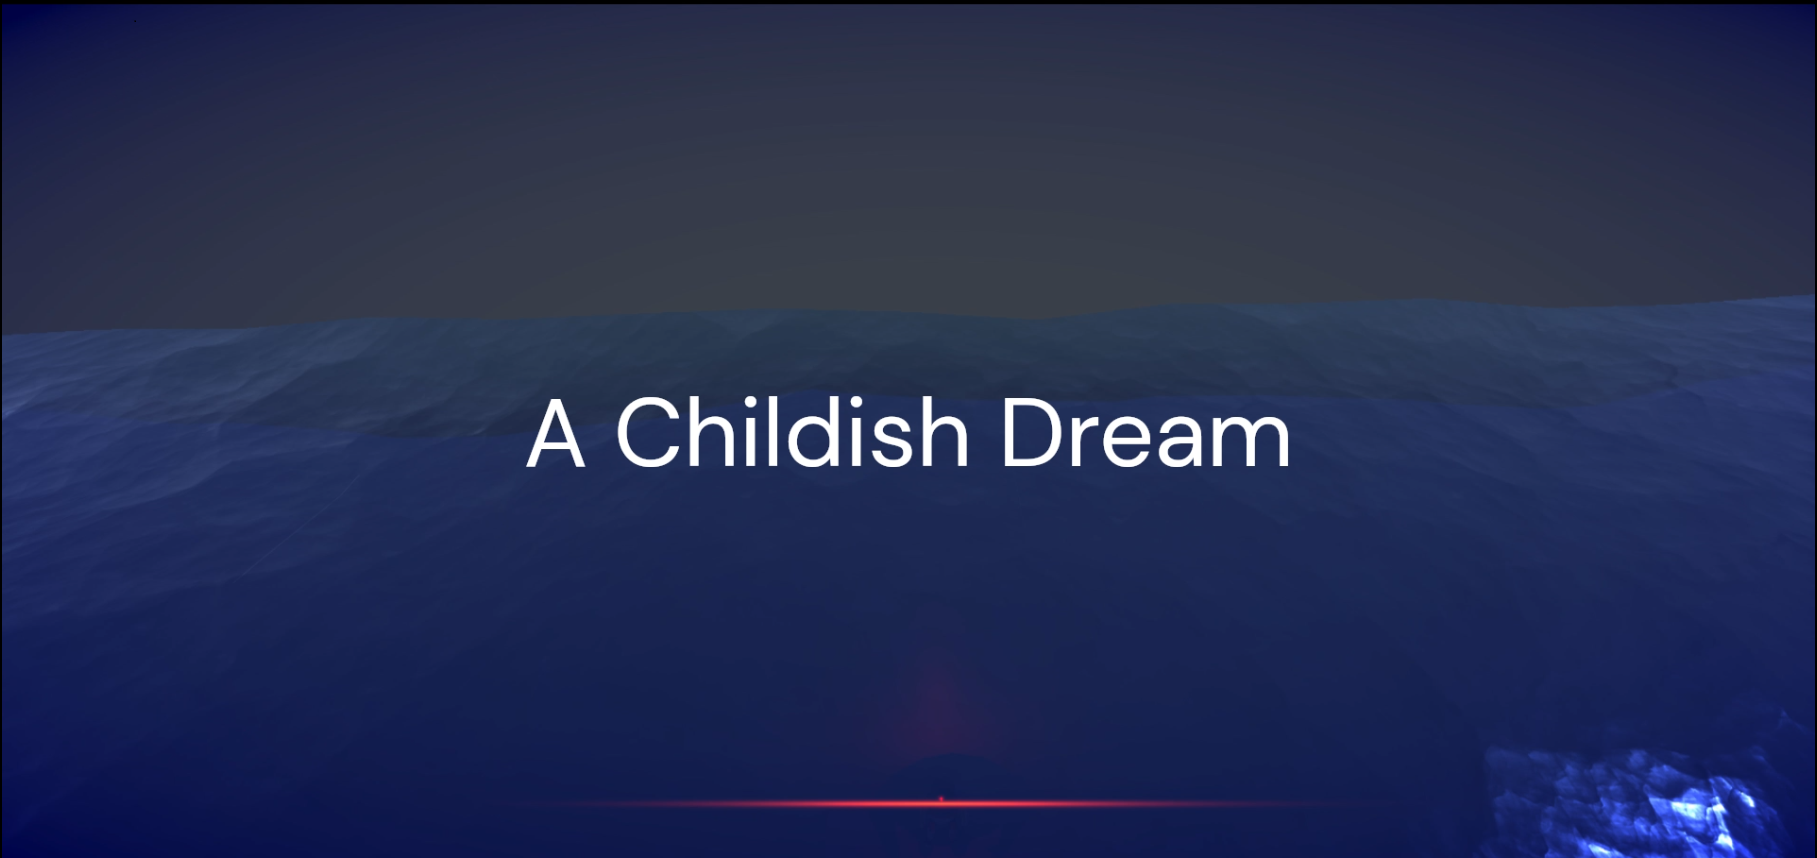 A Childish Dream